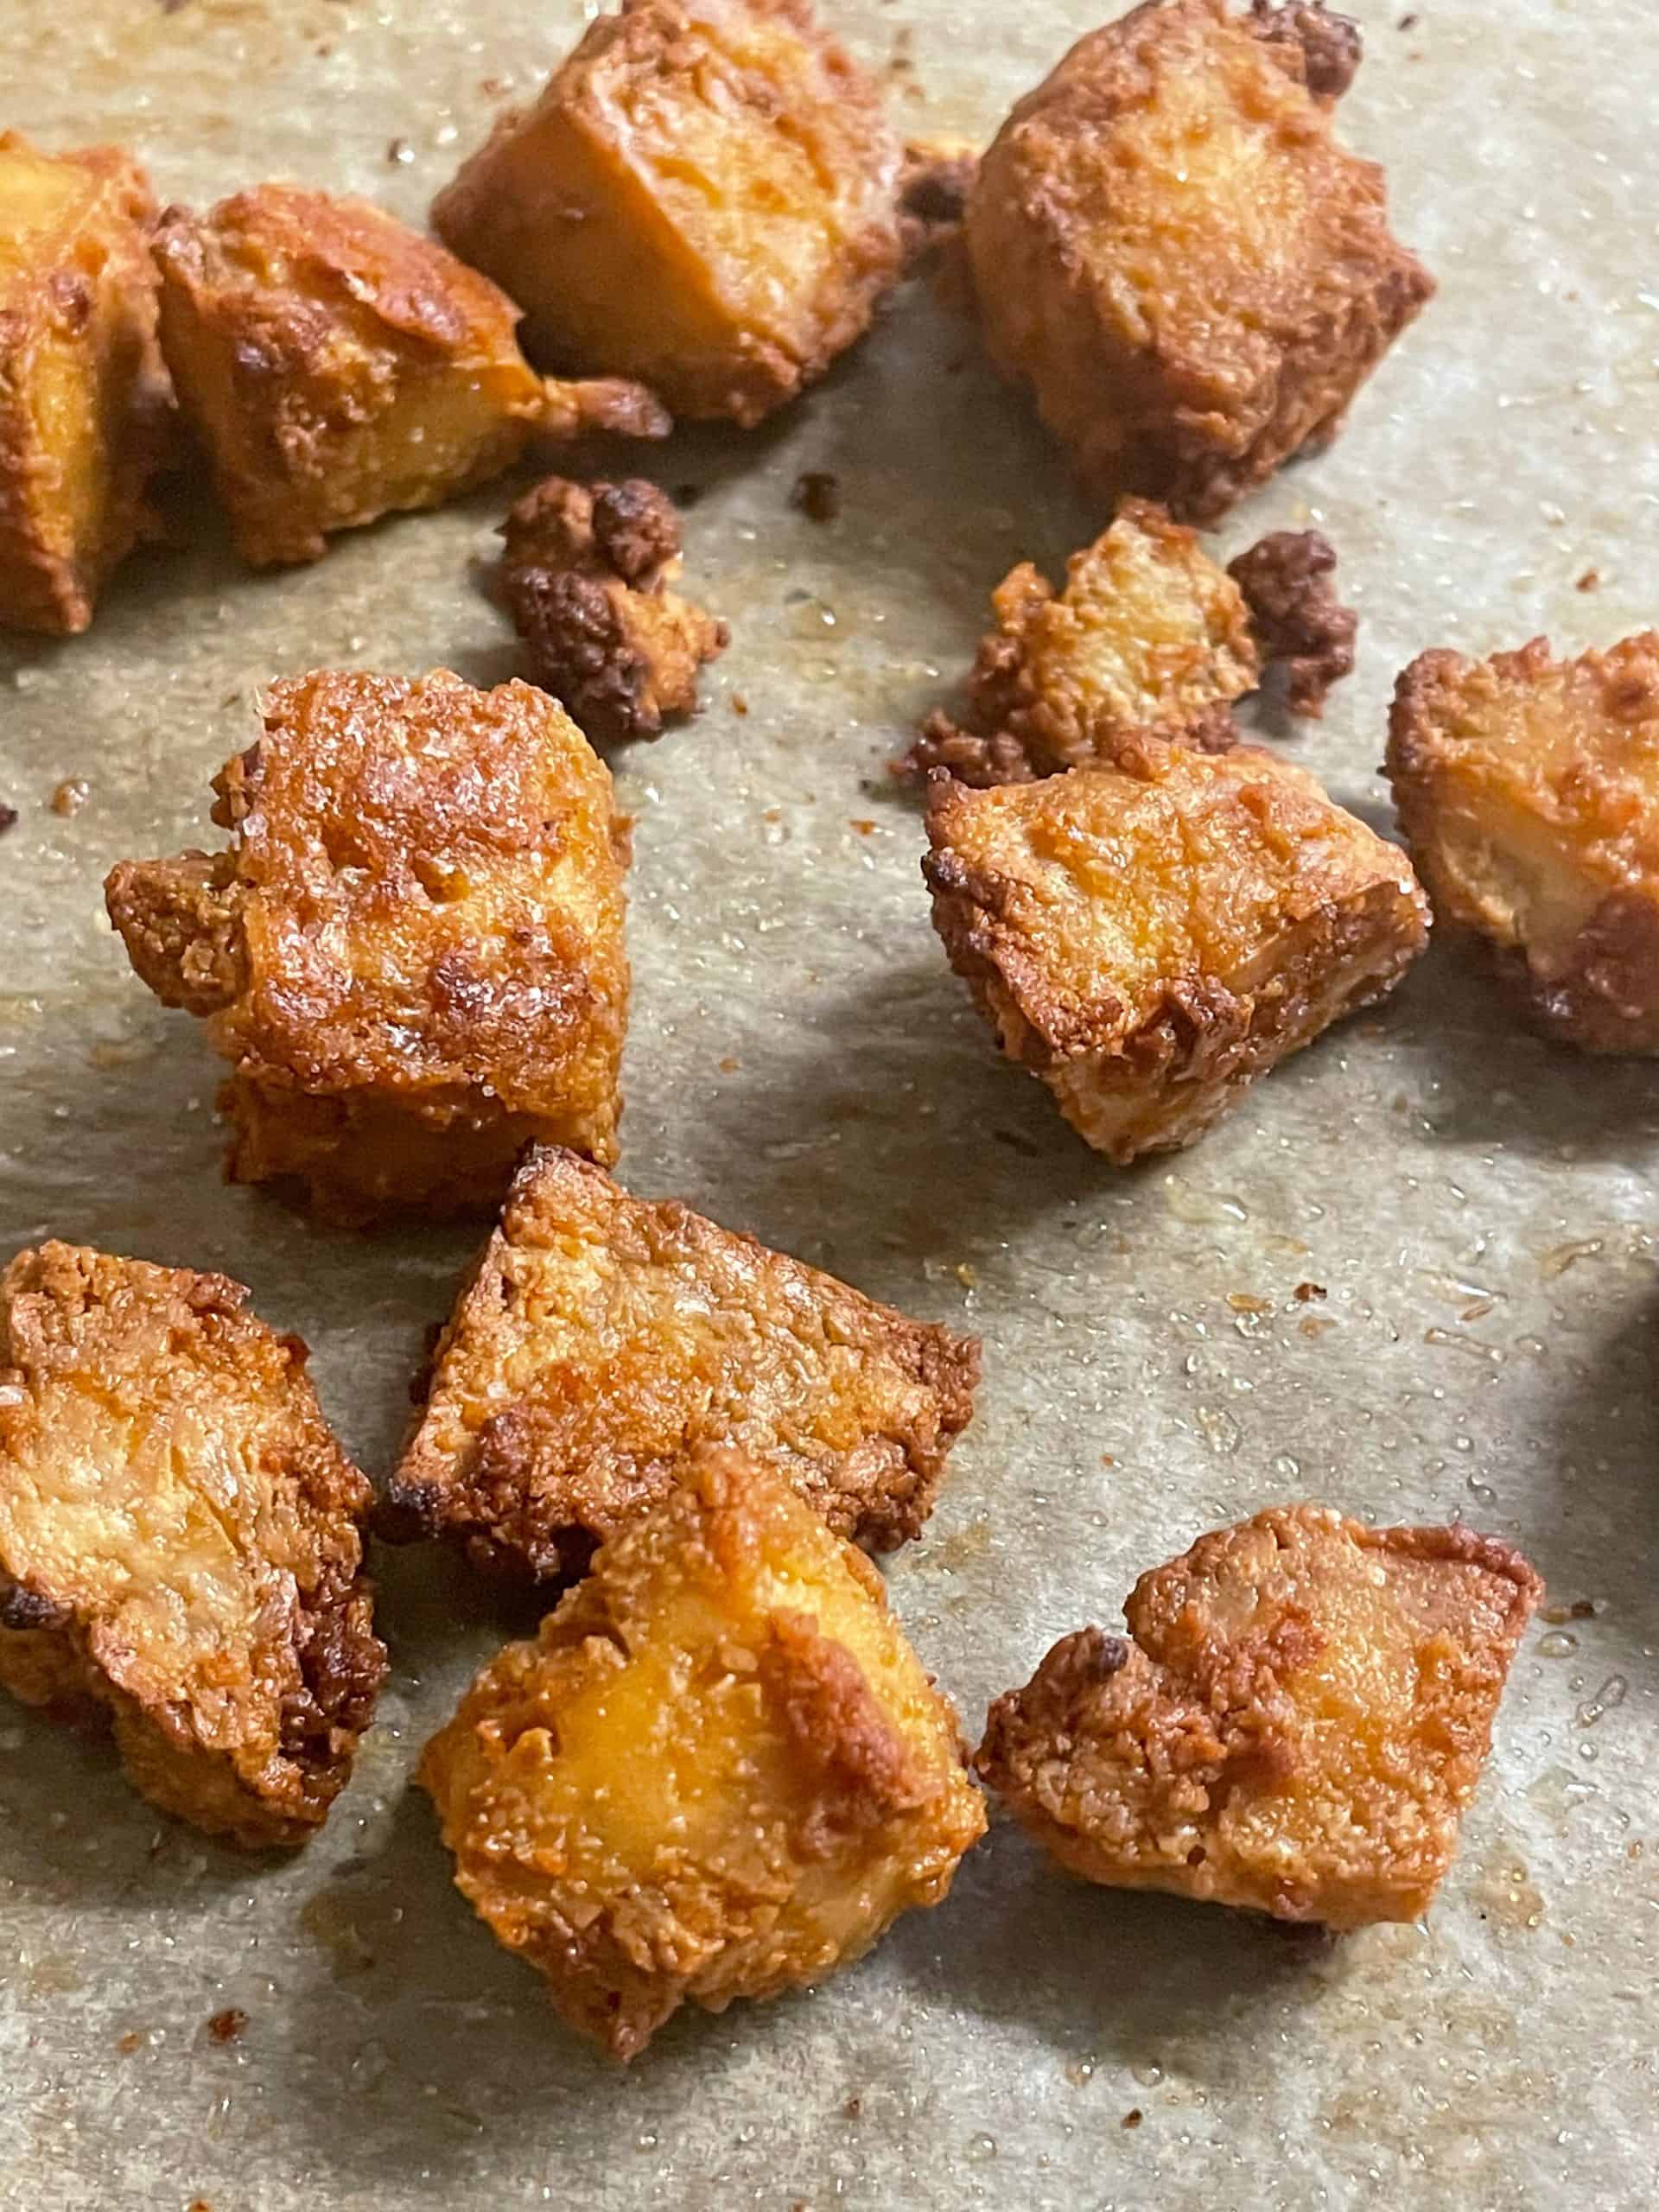 vegan crispy tofu bites on a baking tray featured image.